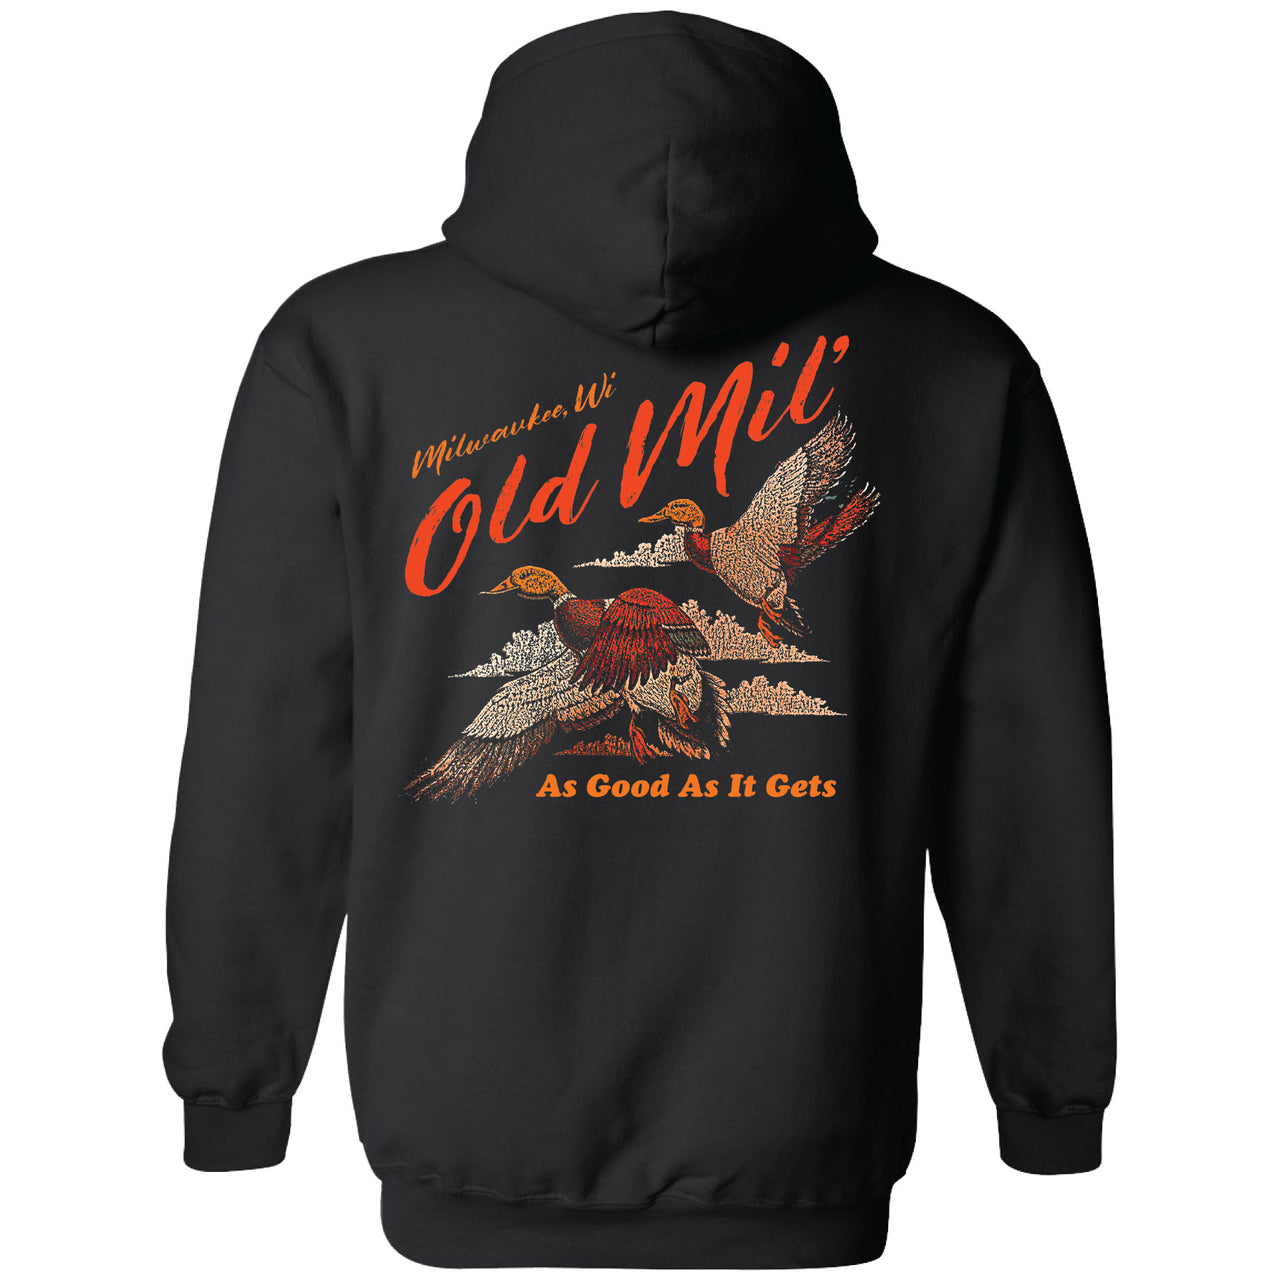 Old Milwaukee - Old Mil, As Good As It Gets, Ducks 2-sided Hooded Sweatshirt